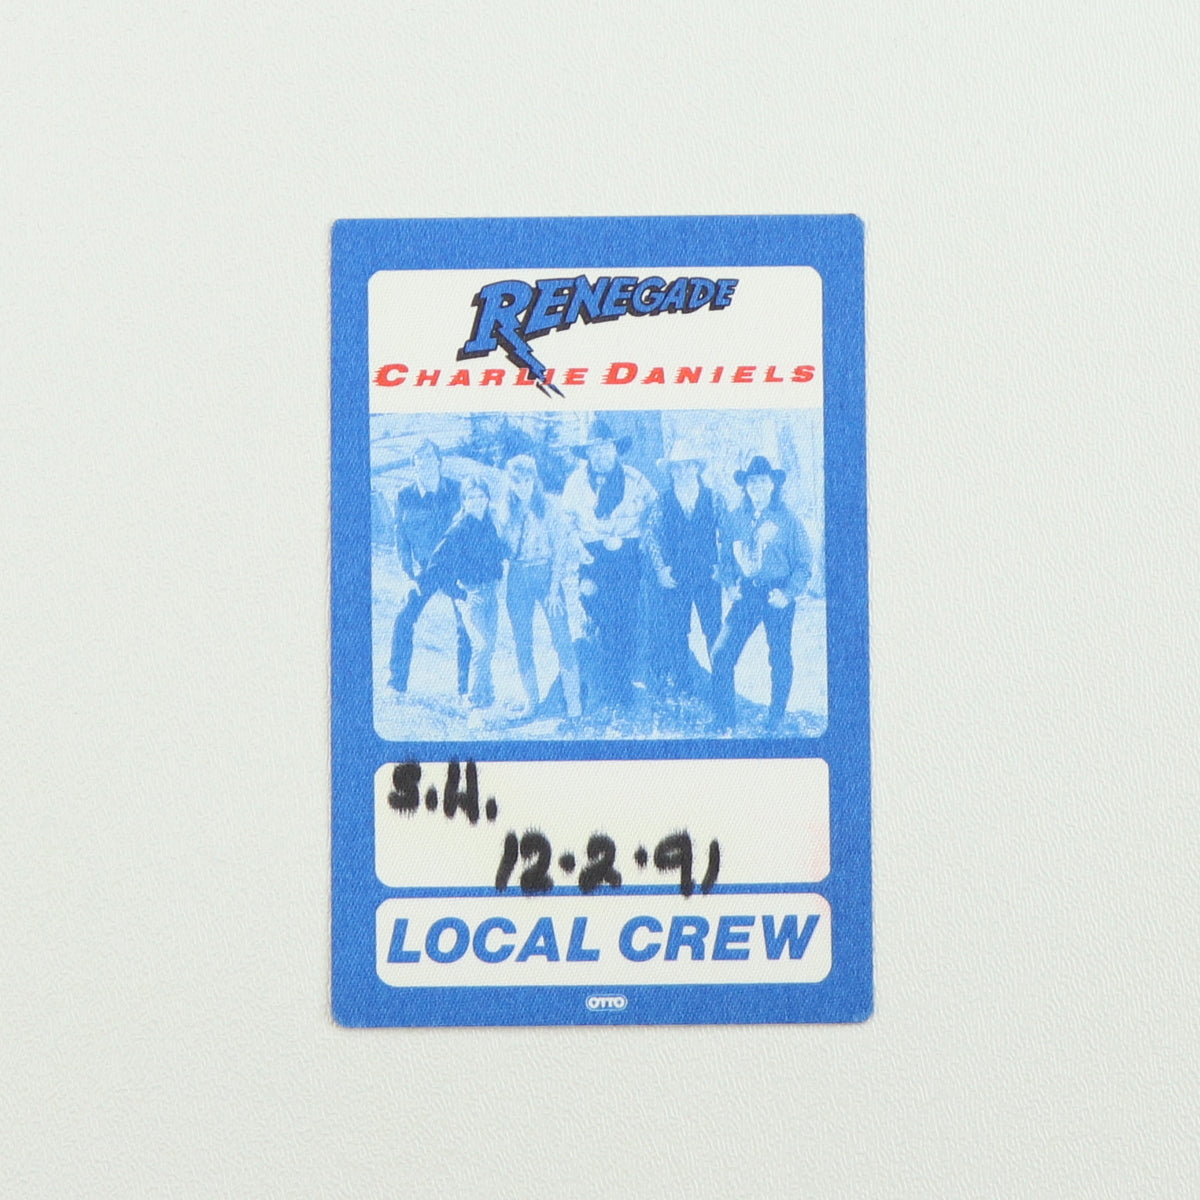 1991 Charlie Daniels Renegade Tour Local Crew Backstage Pass